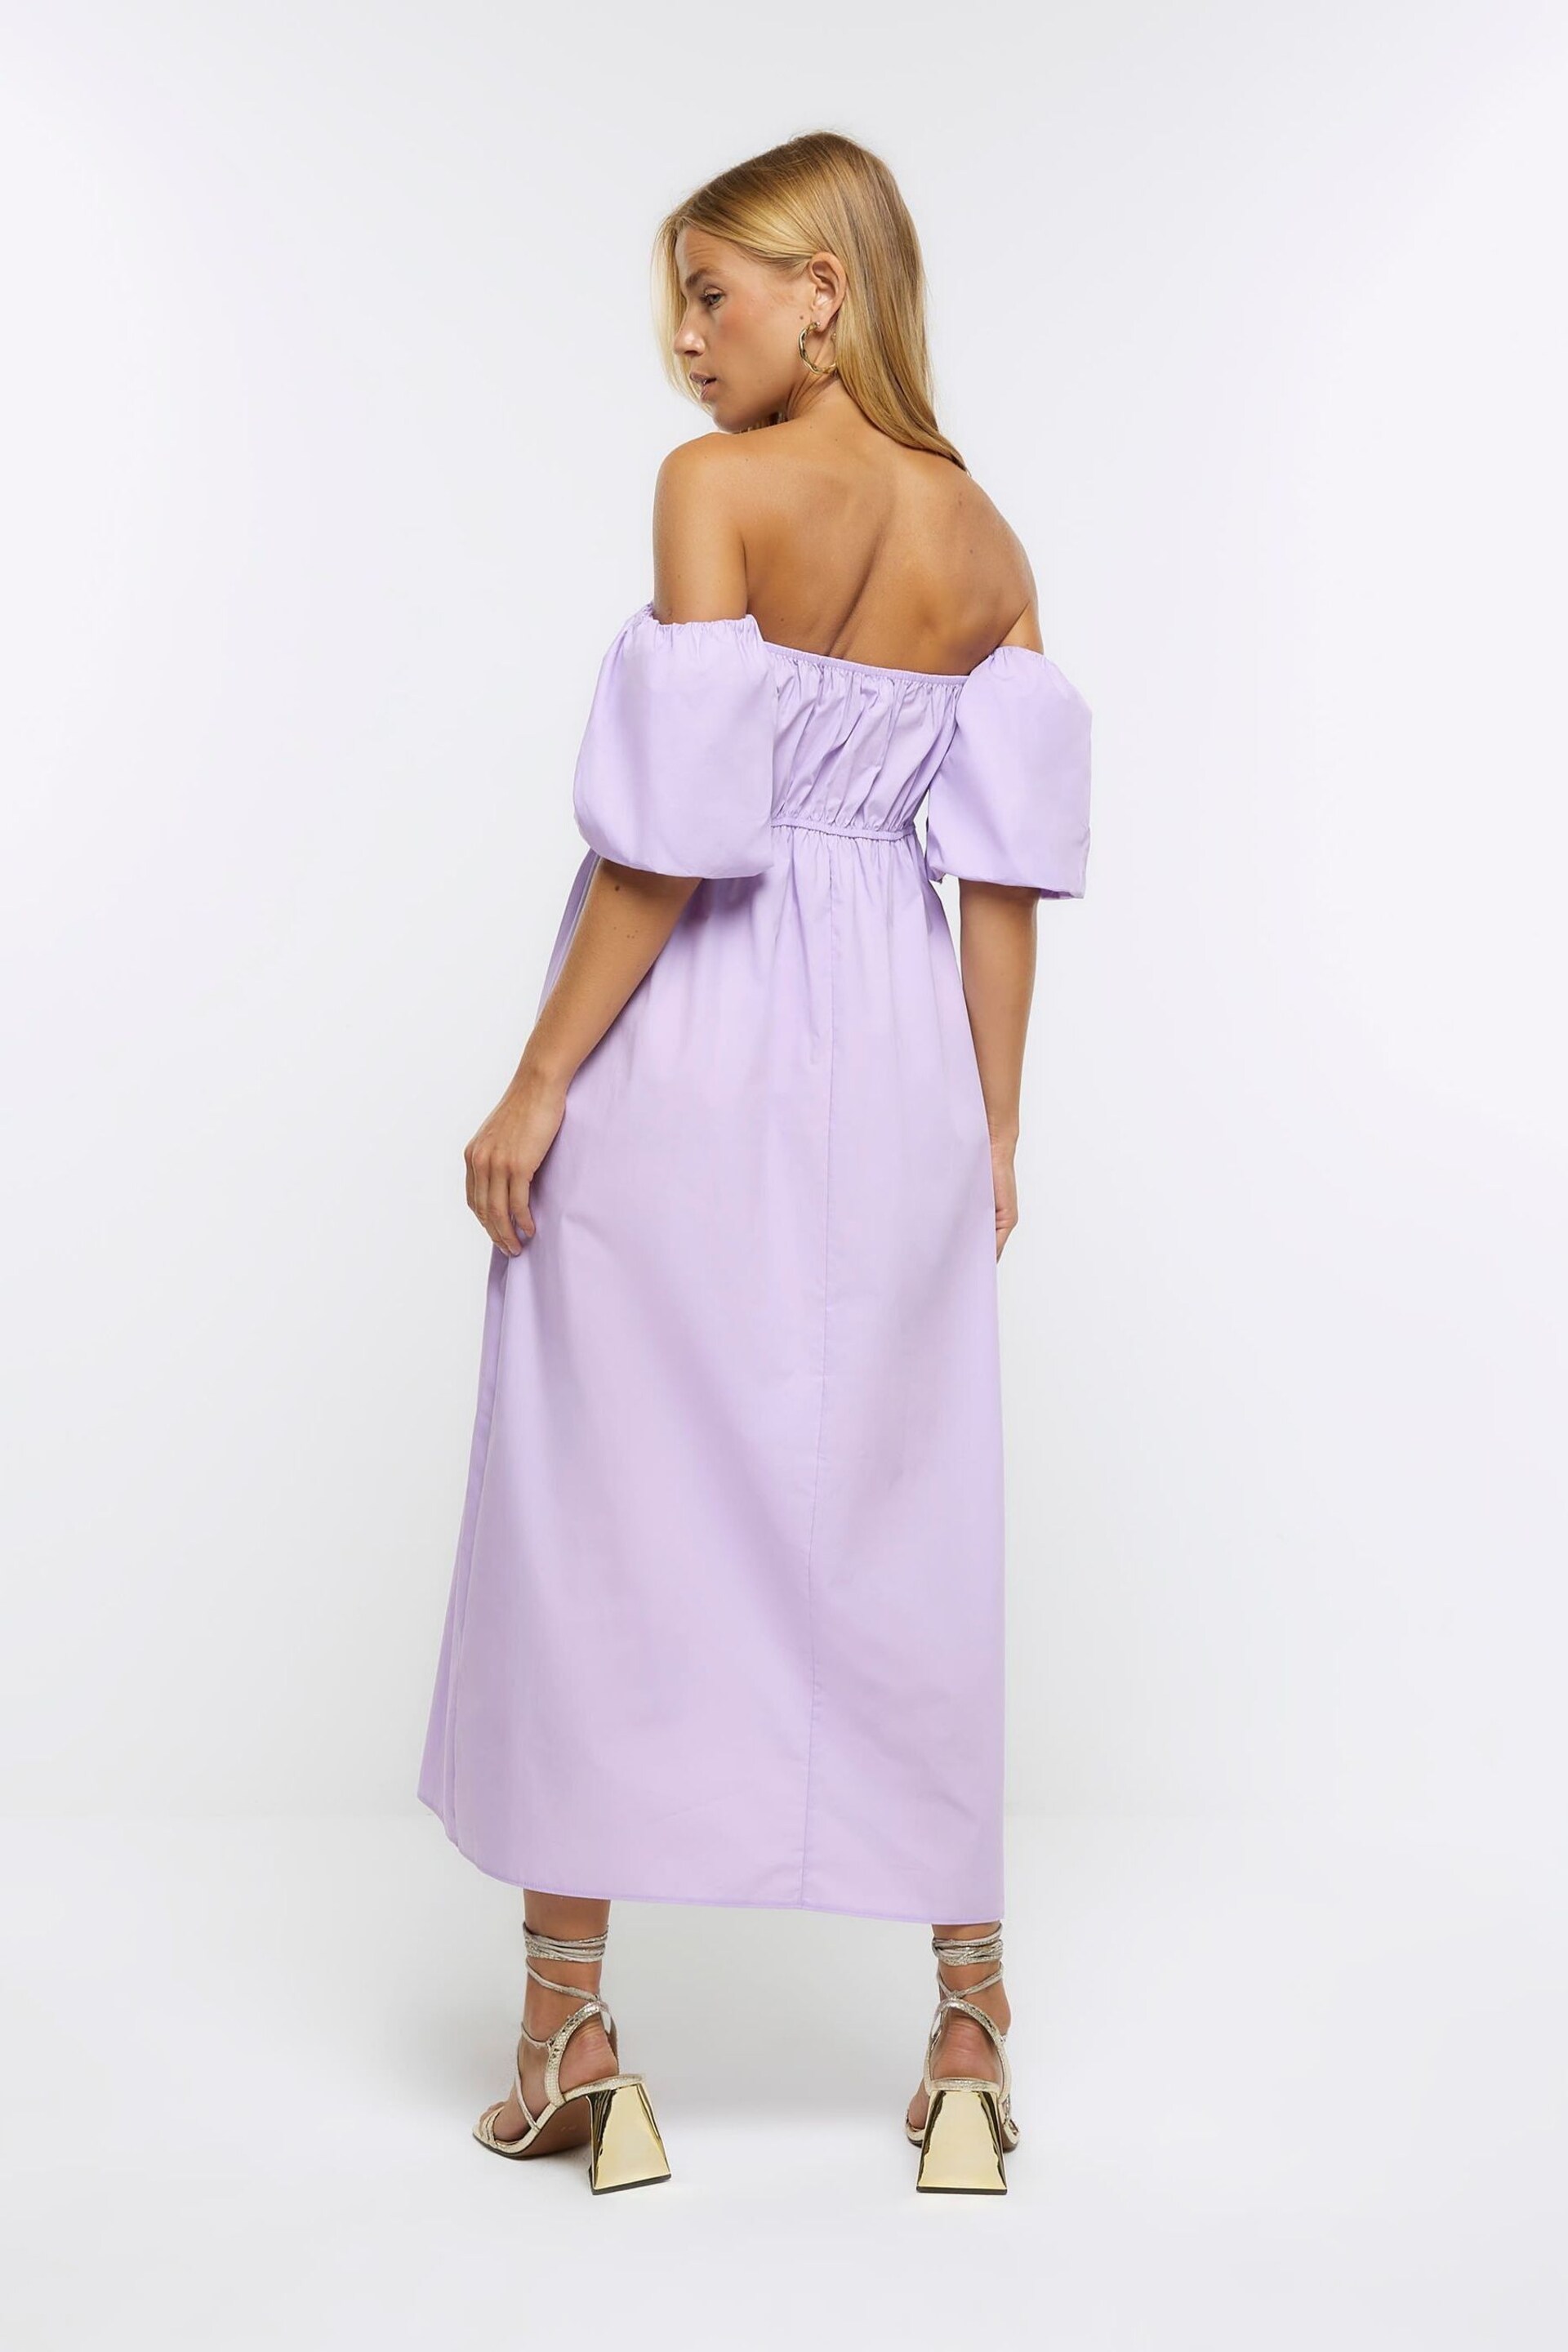 River Island Purple Ruched Bardot Poplin Dress - Image 2 of 6